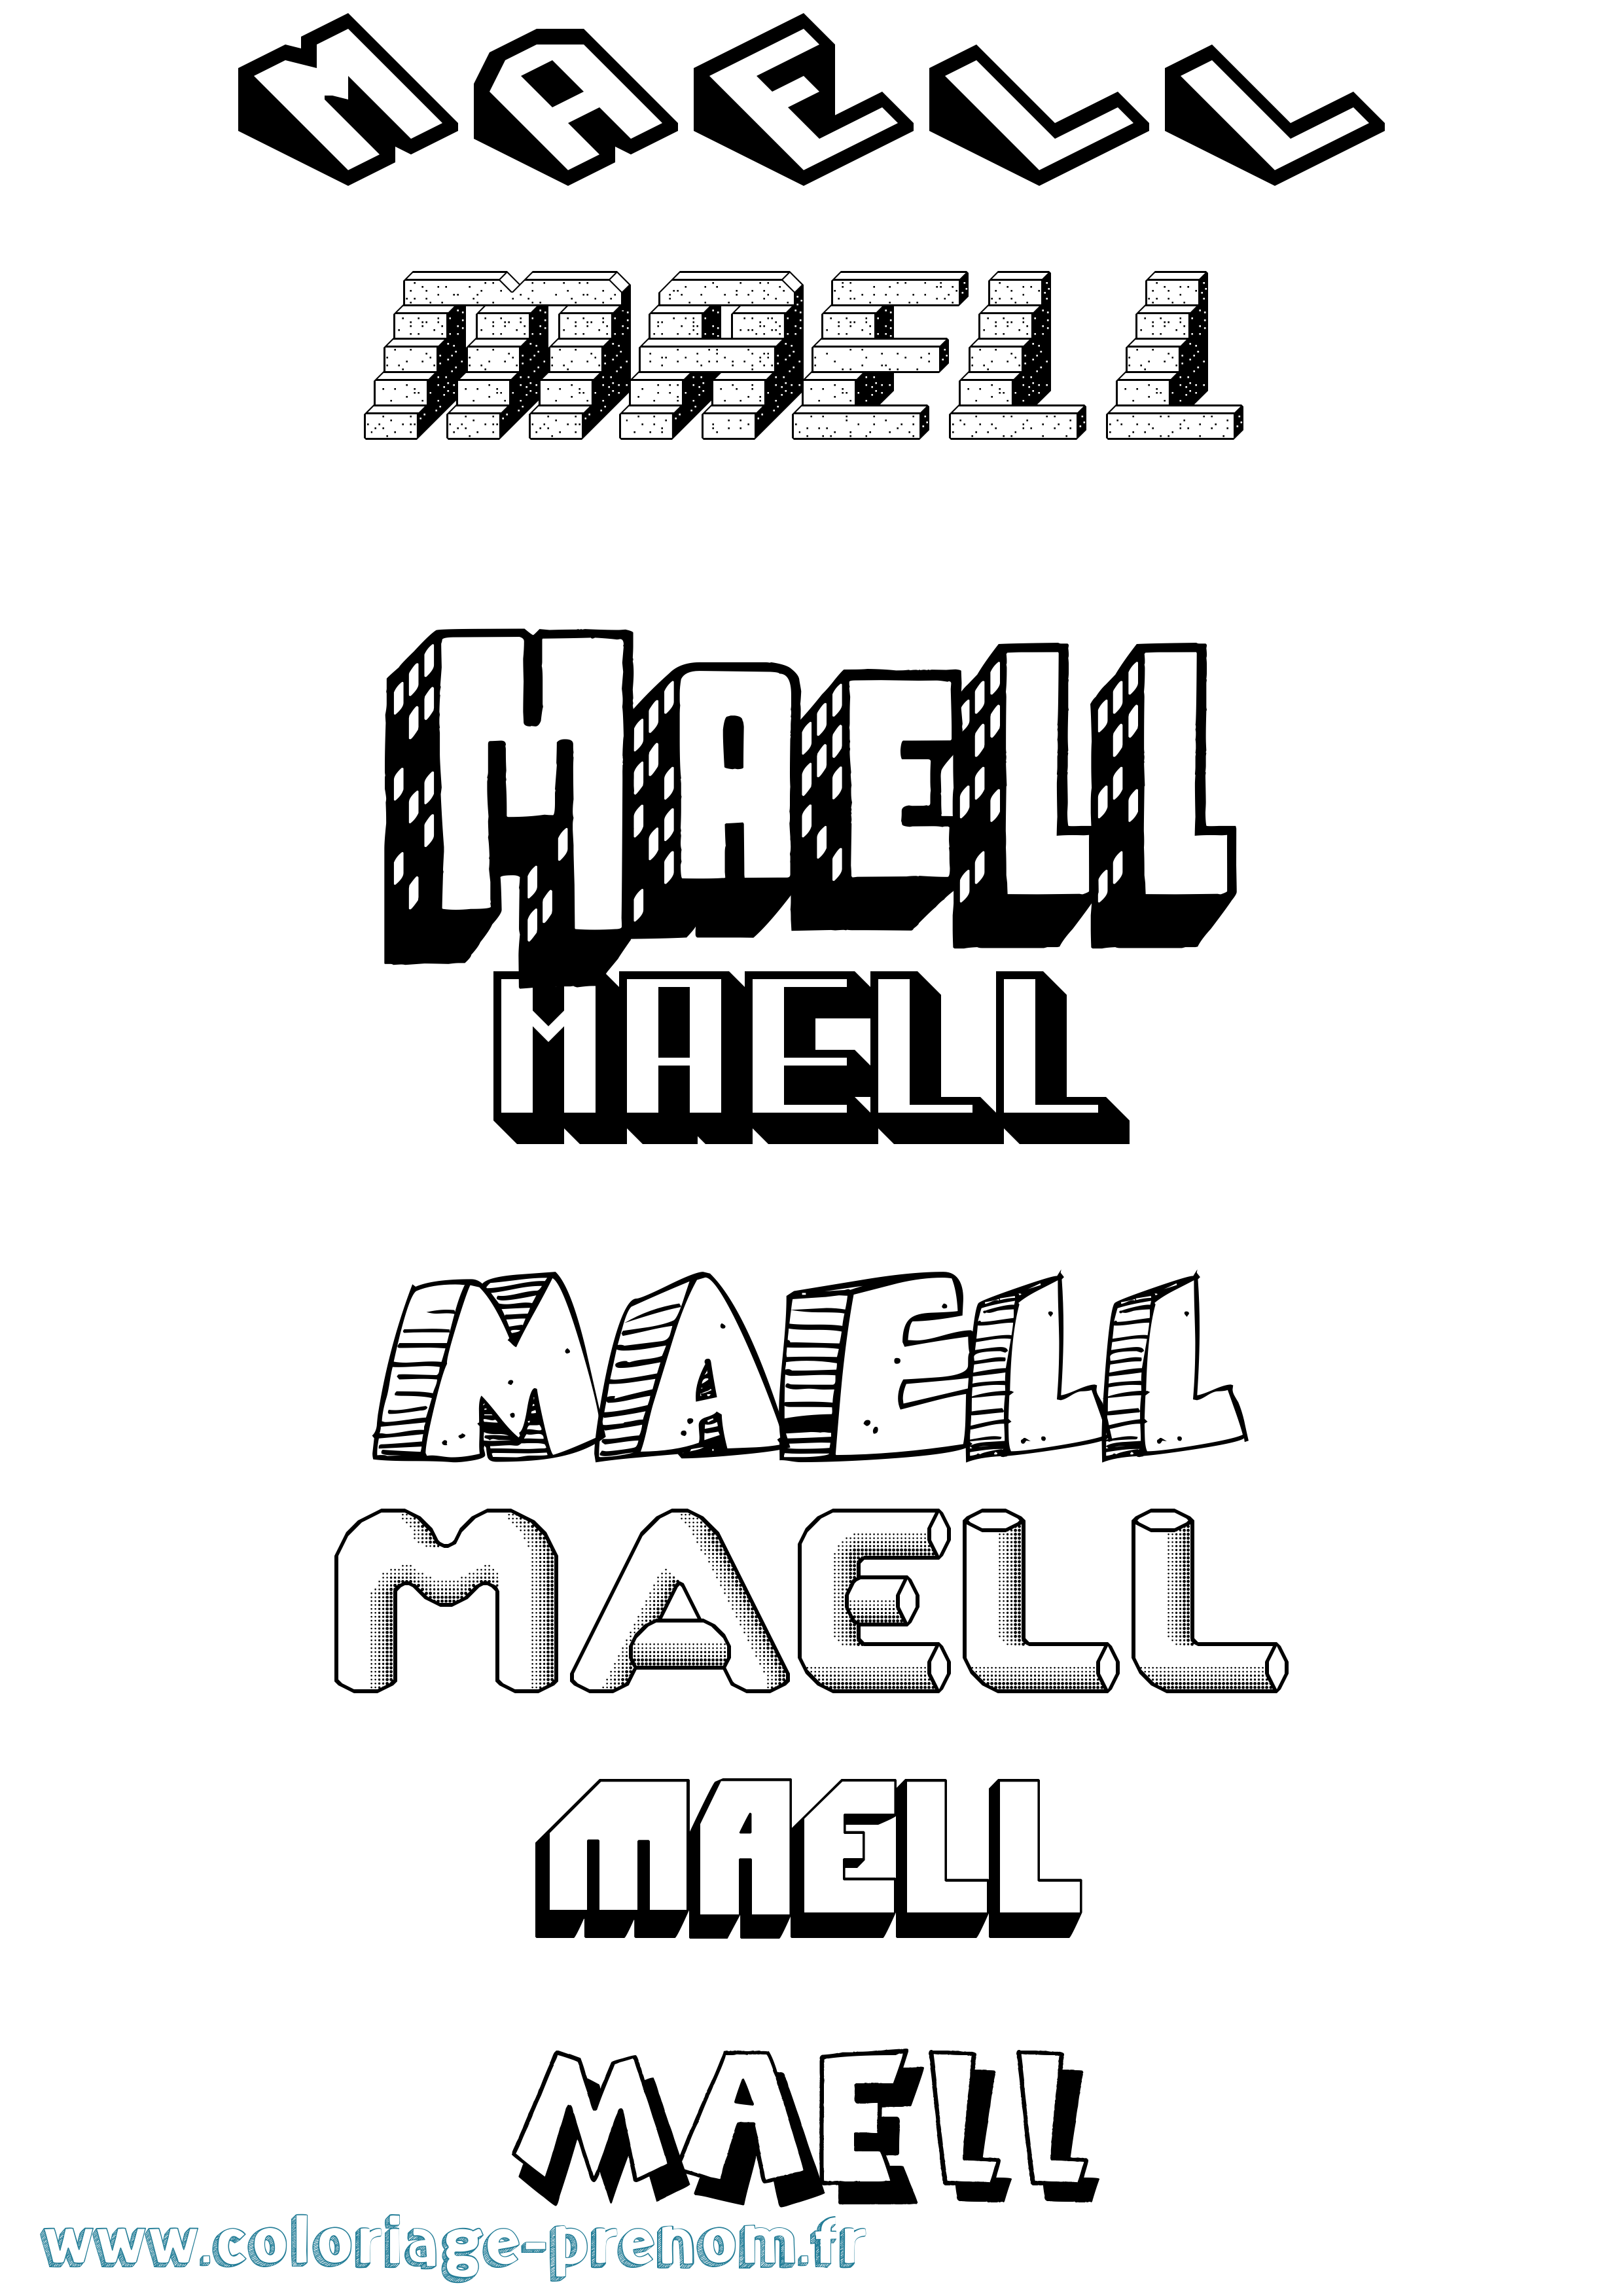 Coloriage prénom Maell Effet 3D